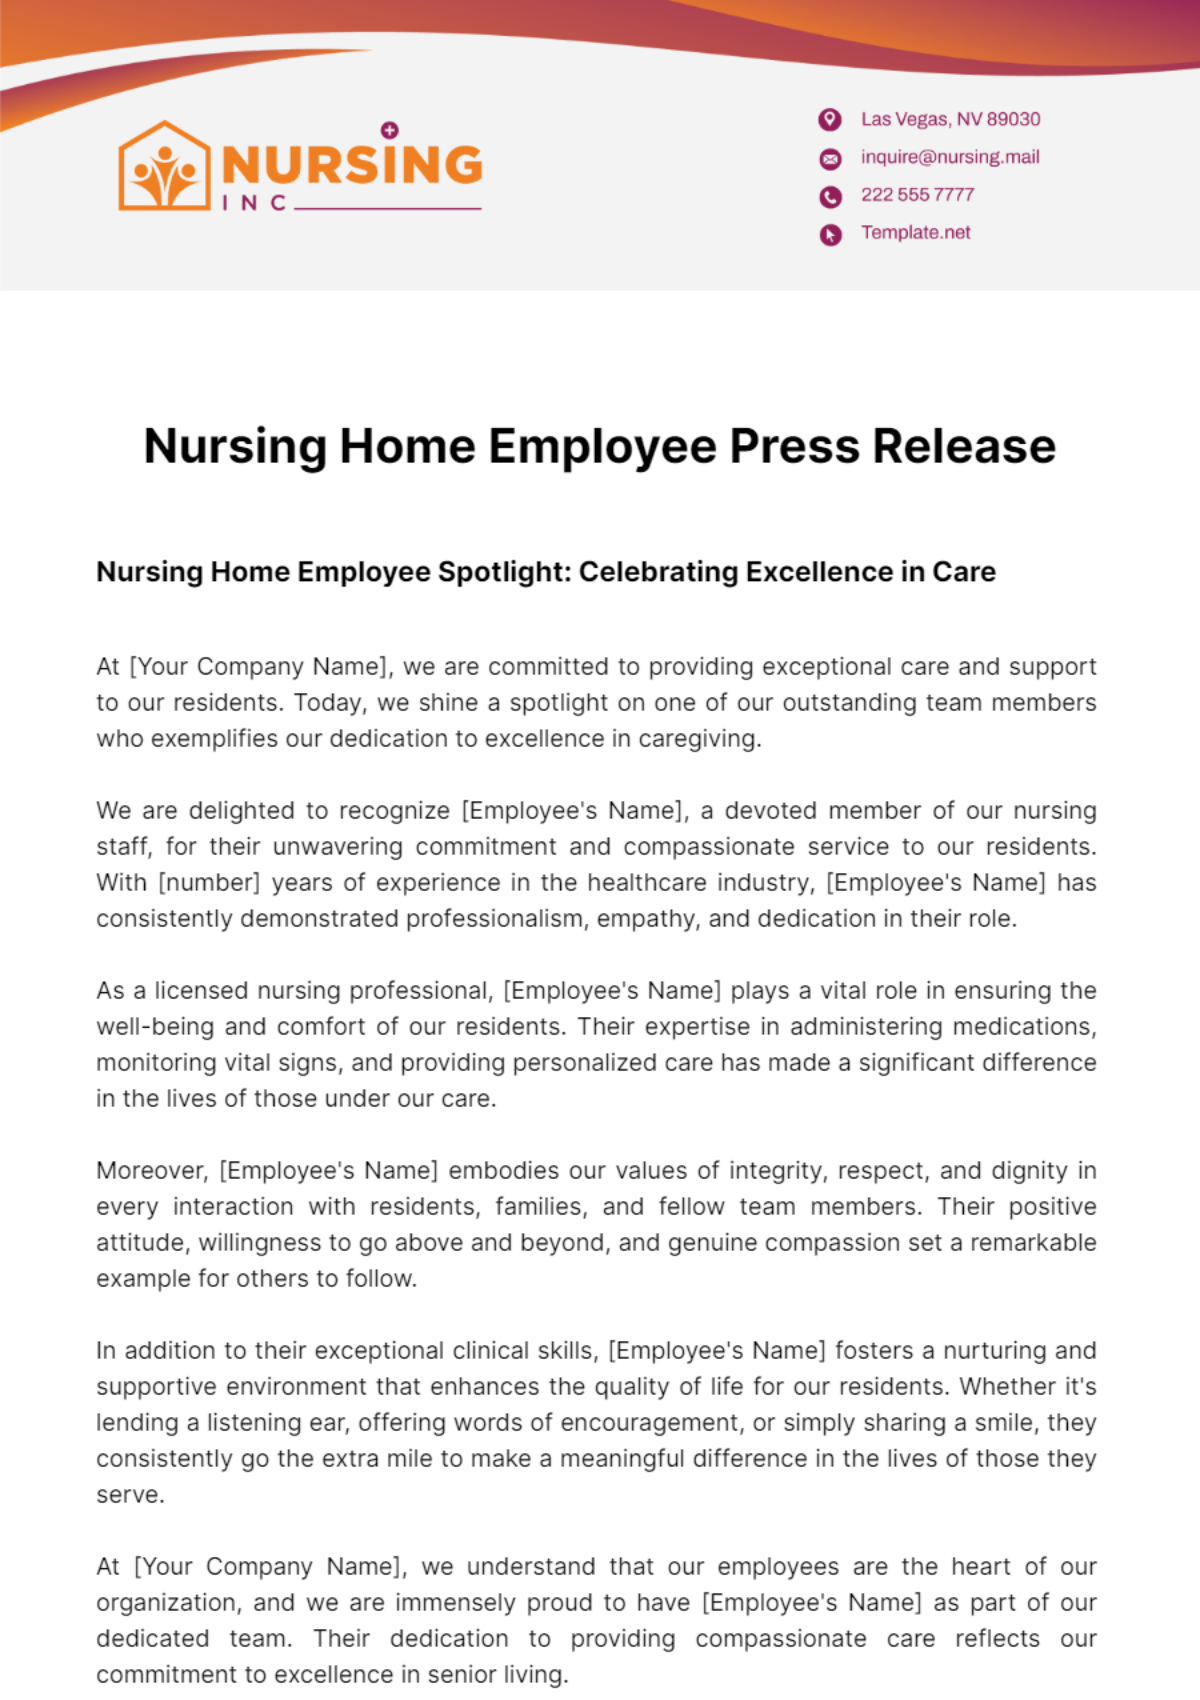 Nursing Home Employee Press Release Template